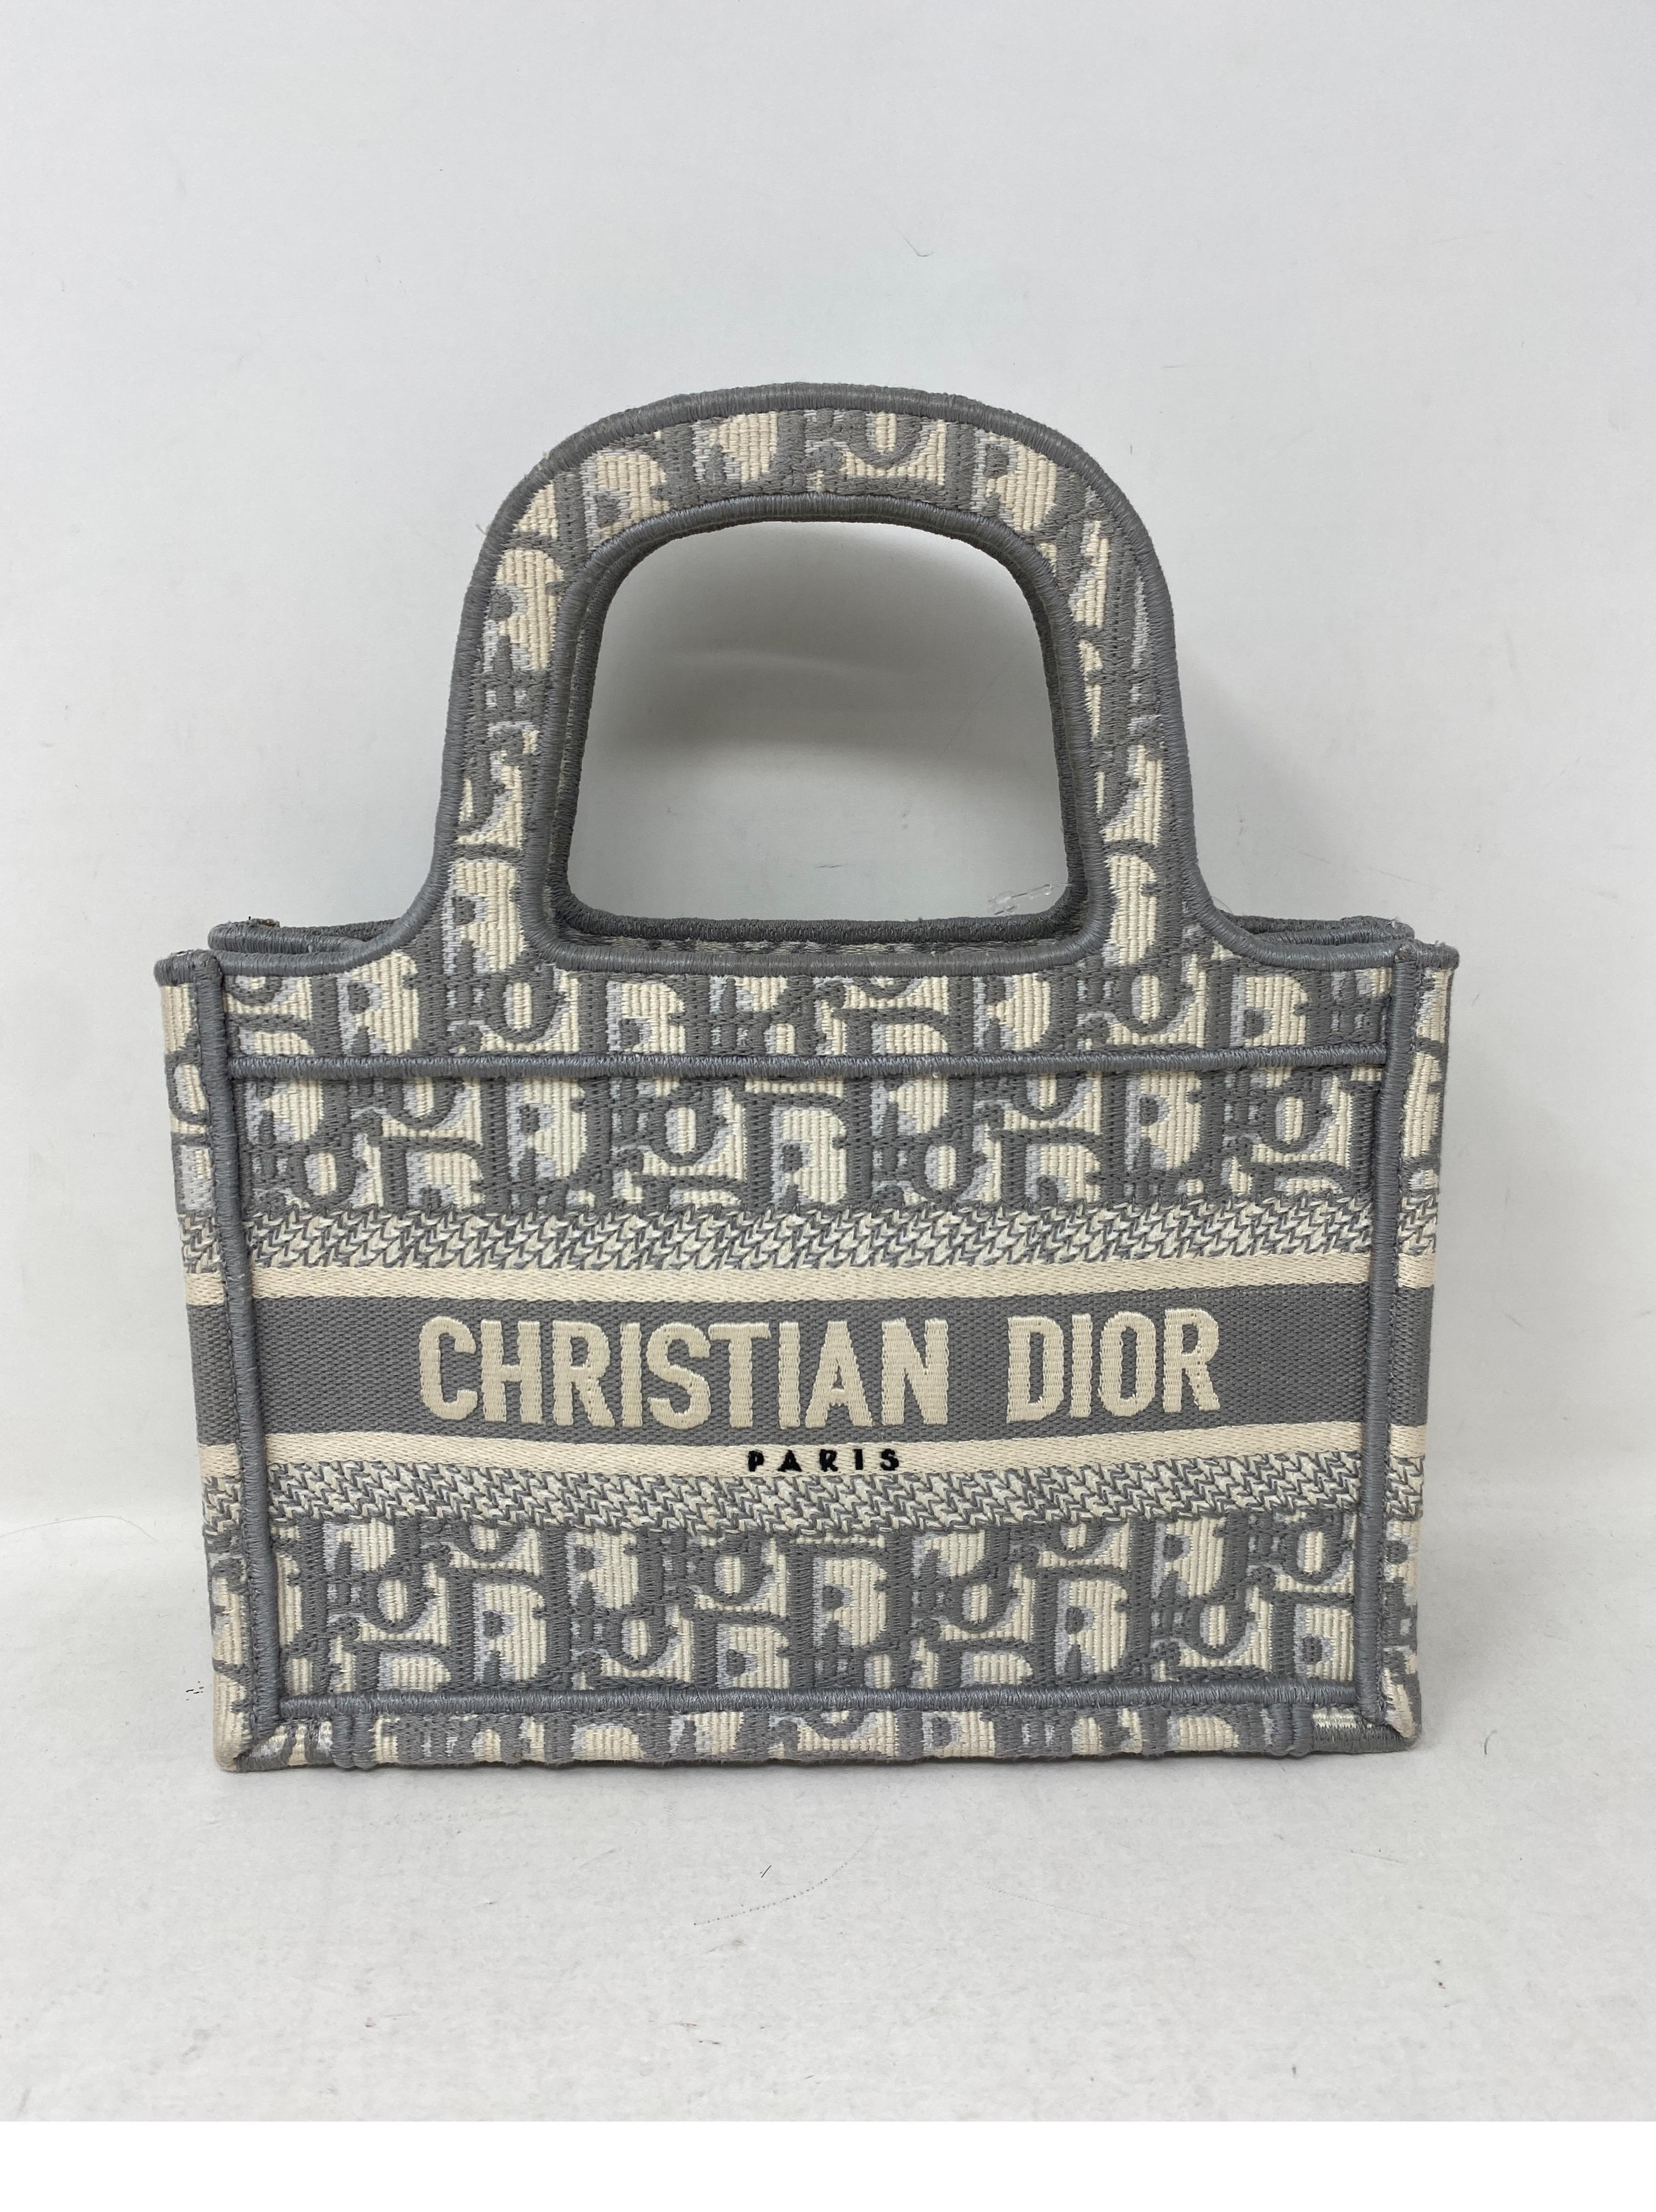 Christian Dior Mini Grey Book Tote Bag. Mint like new condition. Rare size Dior mini bag. Includes dust bag. Guaranteed authentic. 